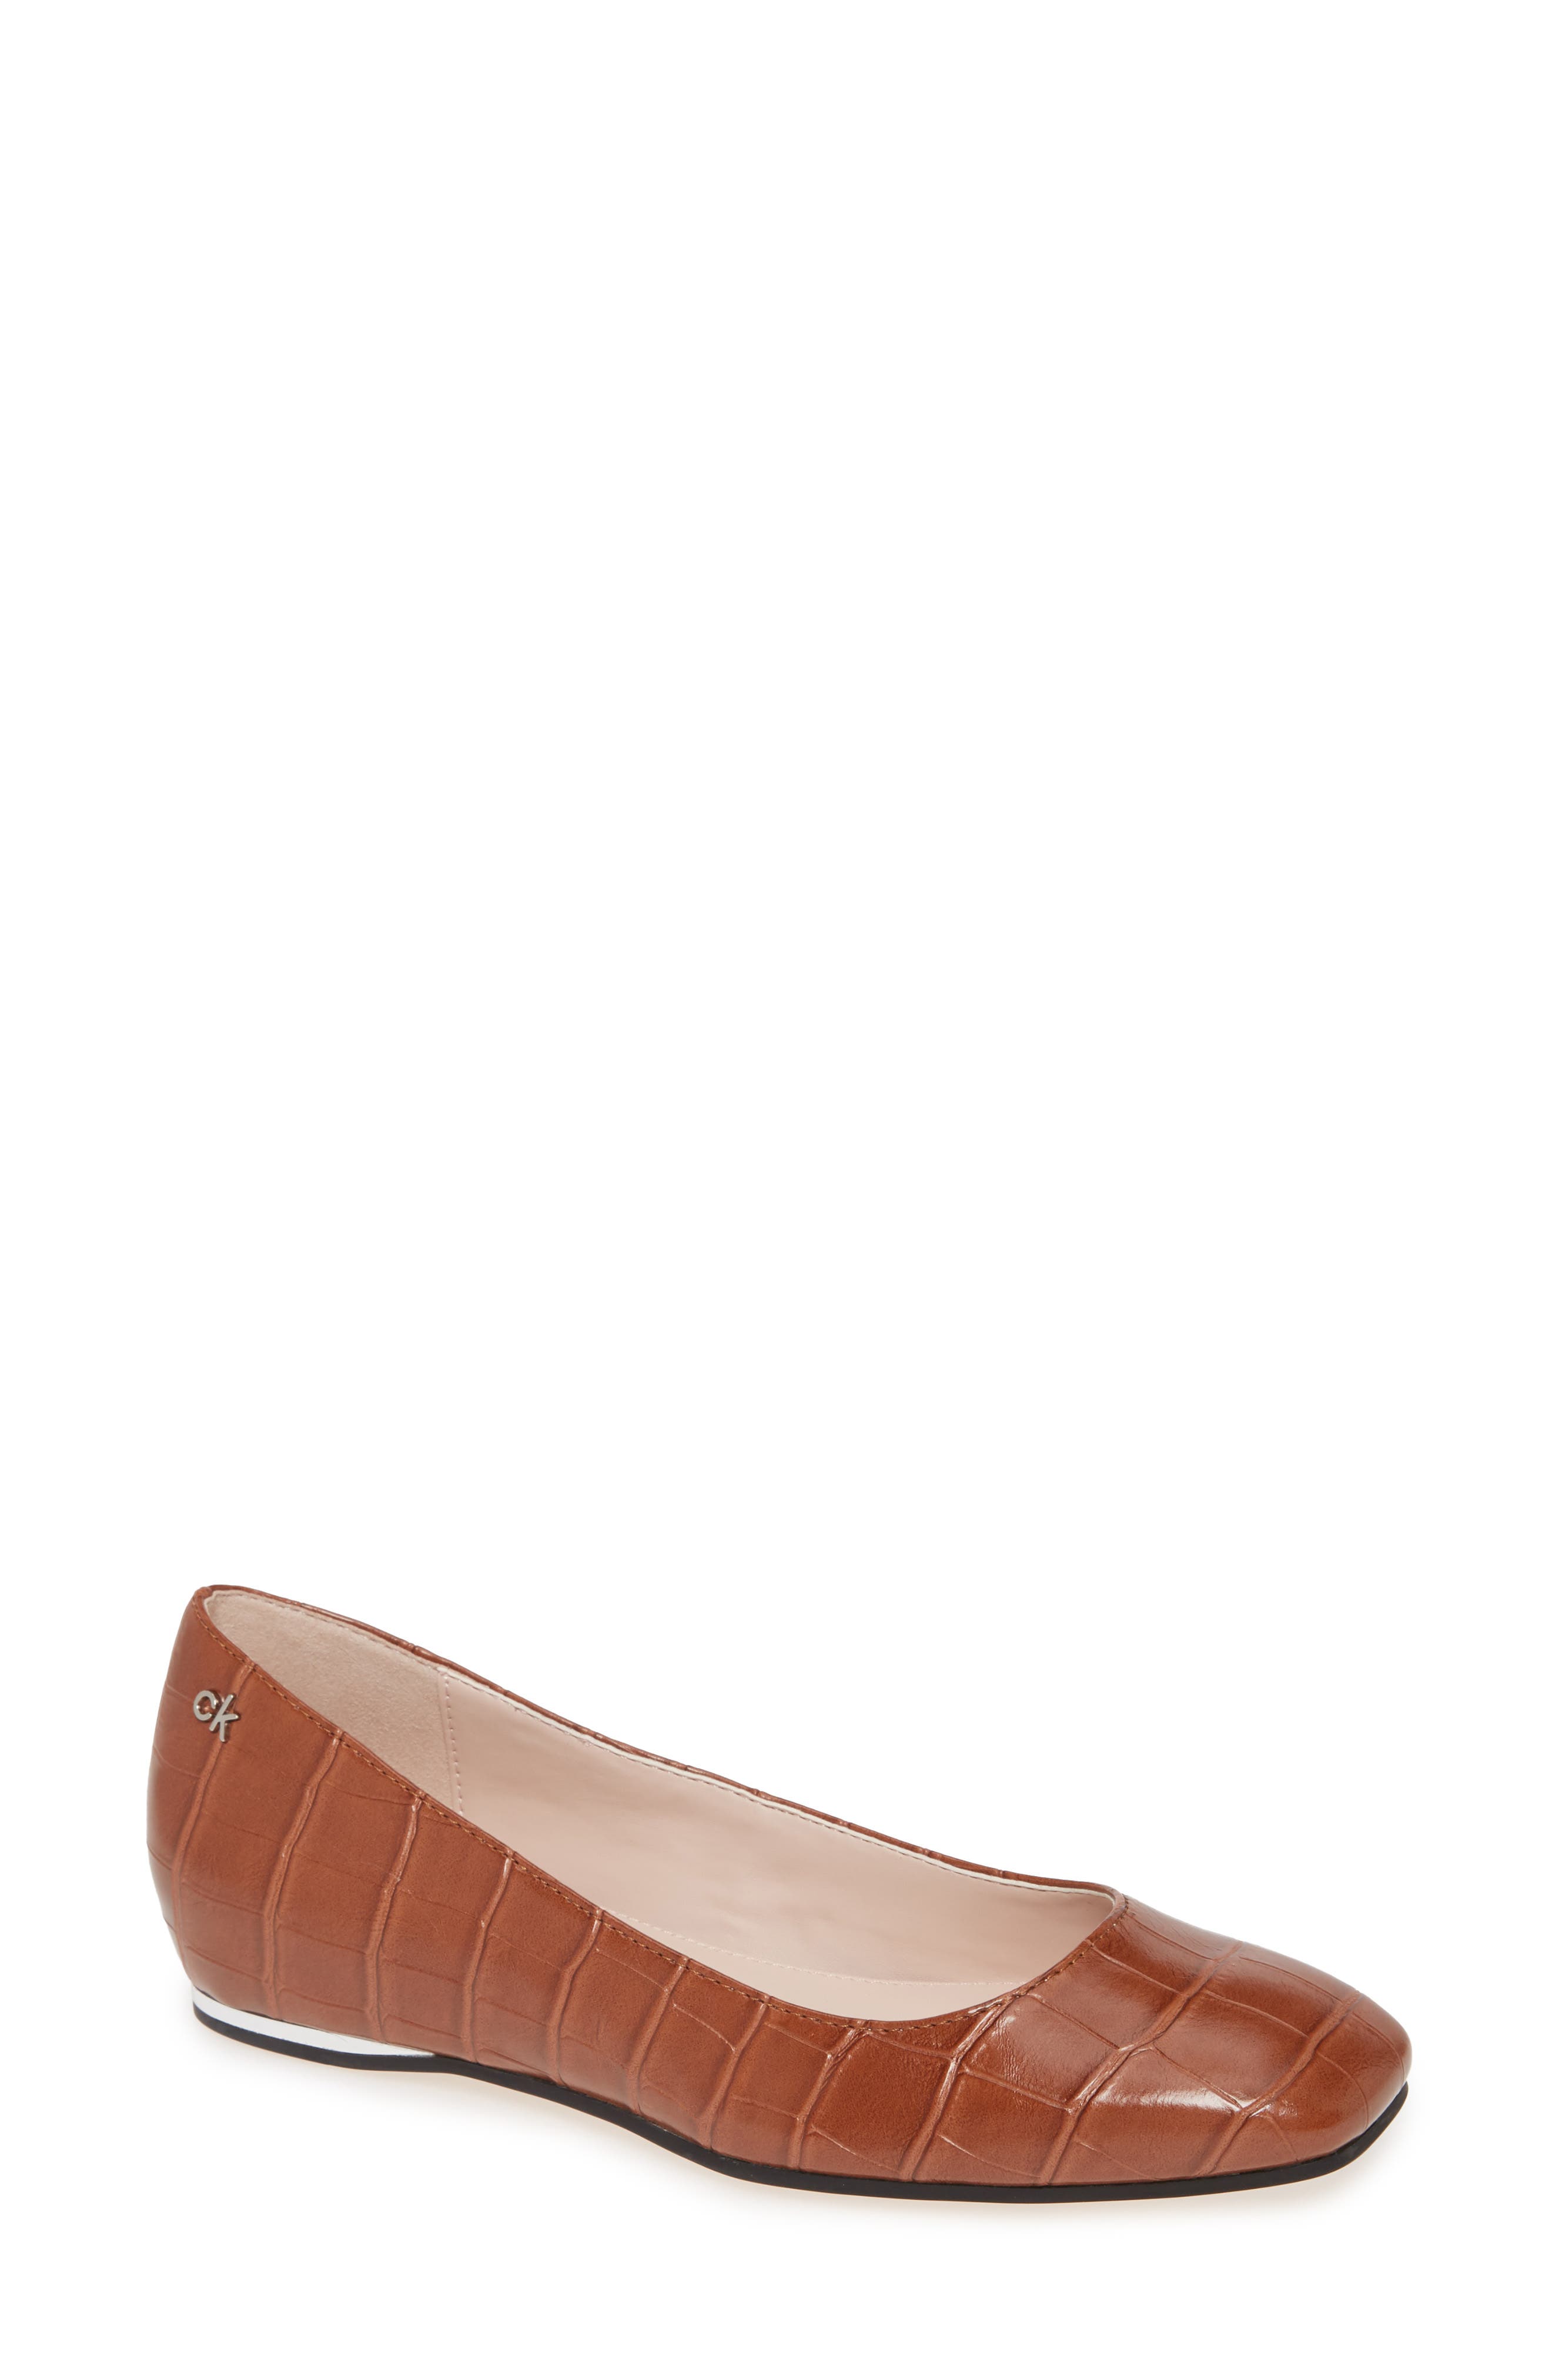 UPC 194060229003 product image for Women's Calvin Klein Heidy Skimmer Flat, Size 9.5 M - Brown | upcitemdb.com